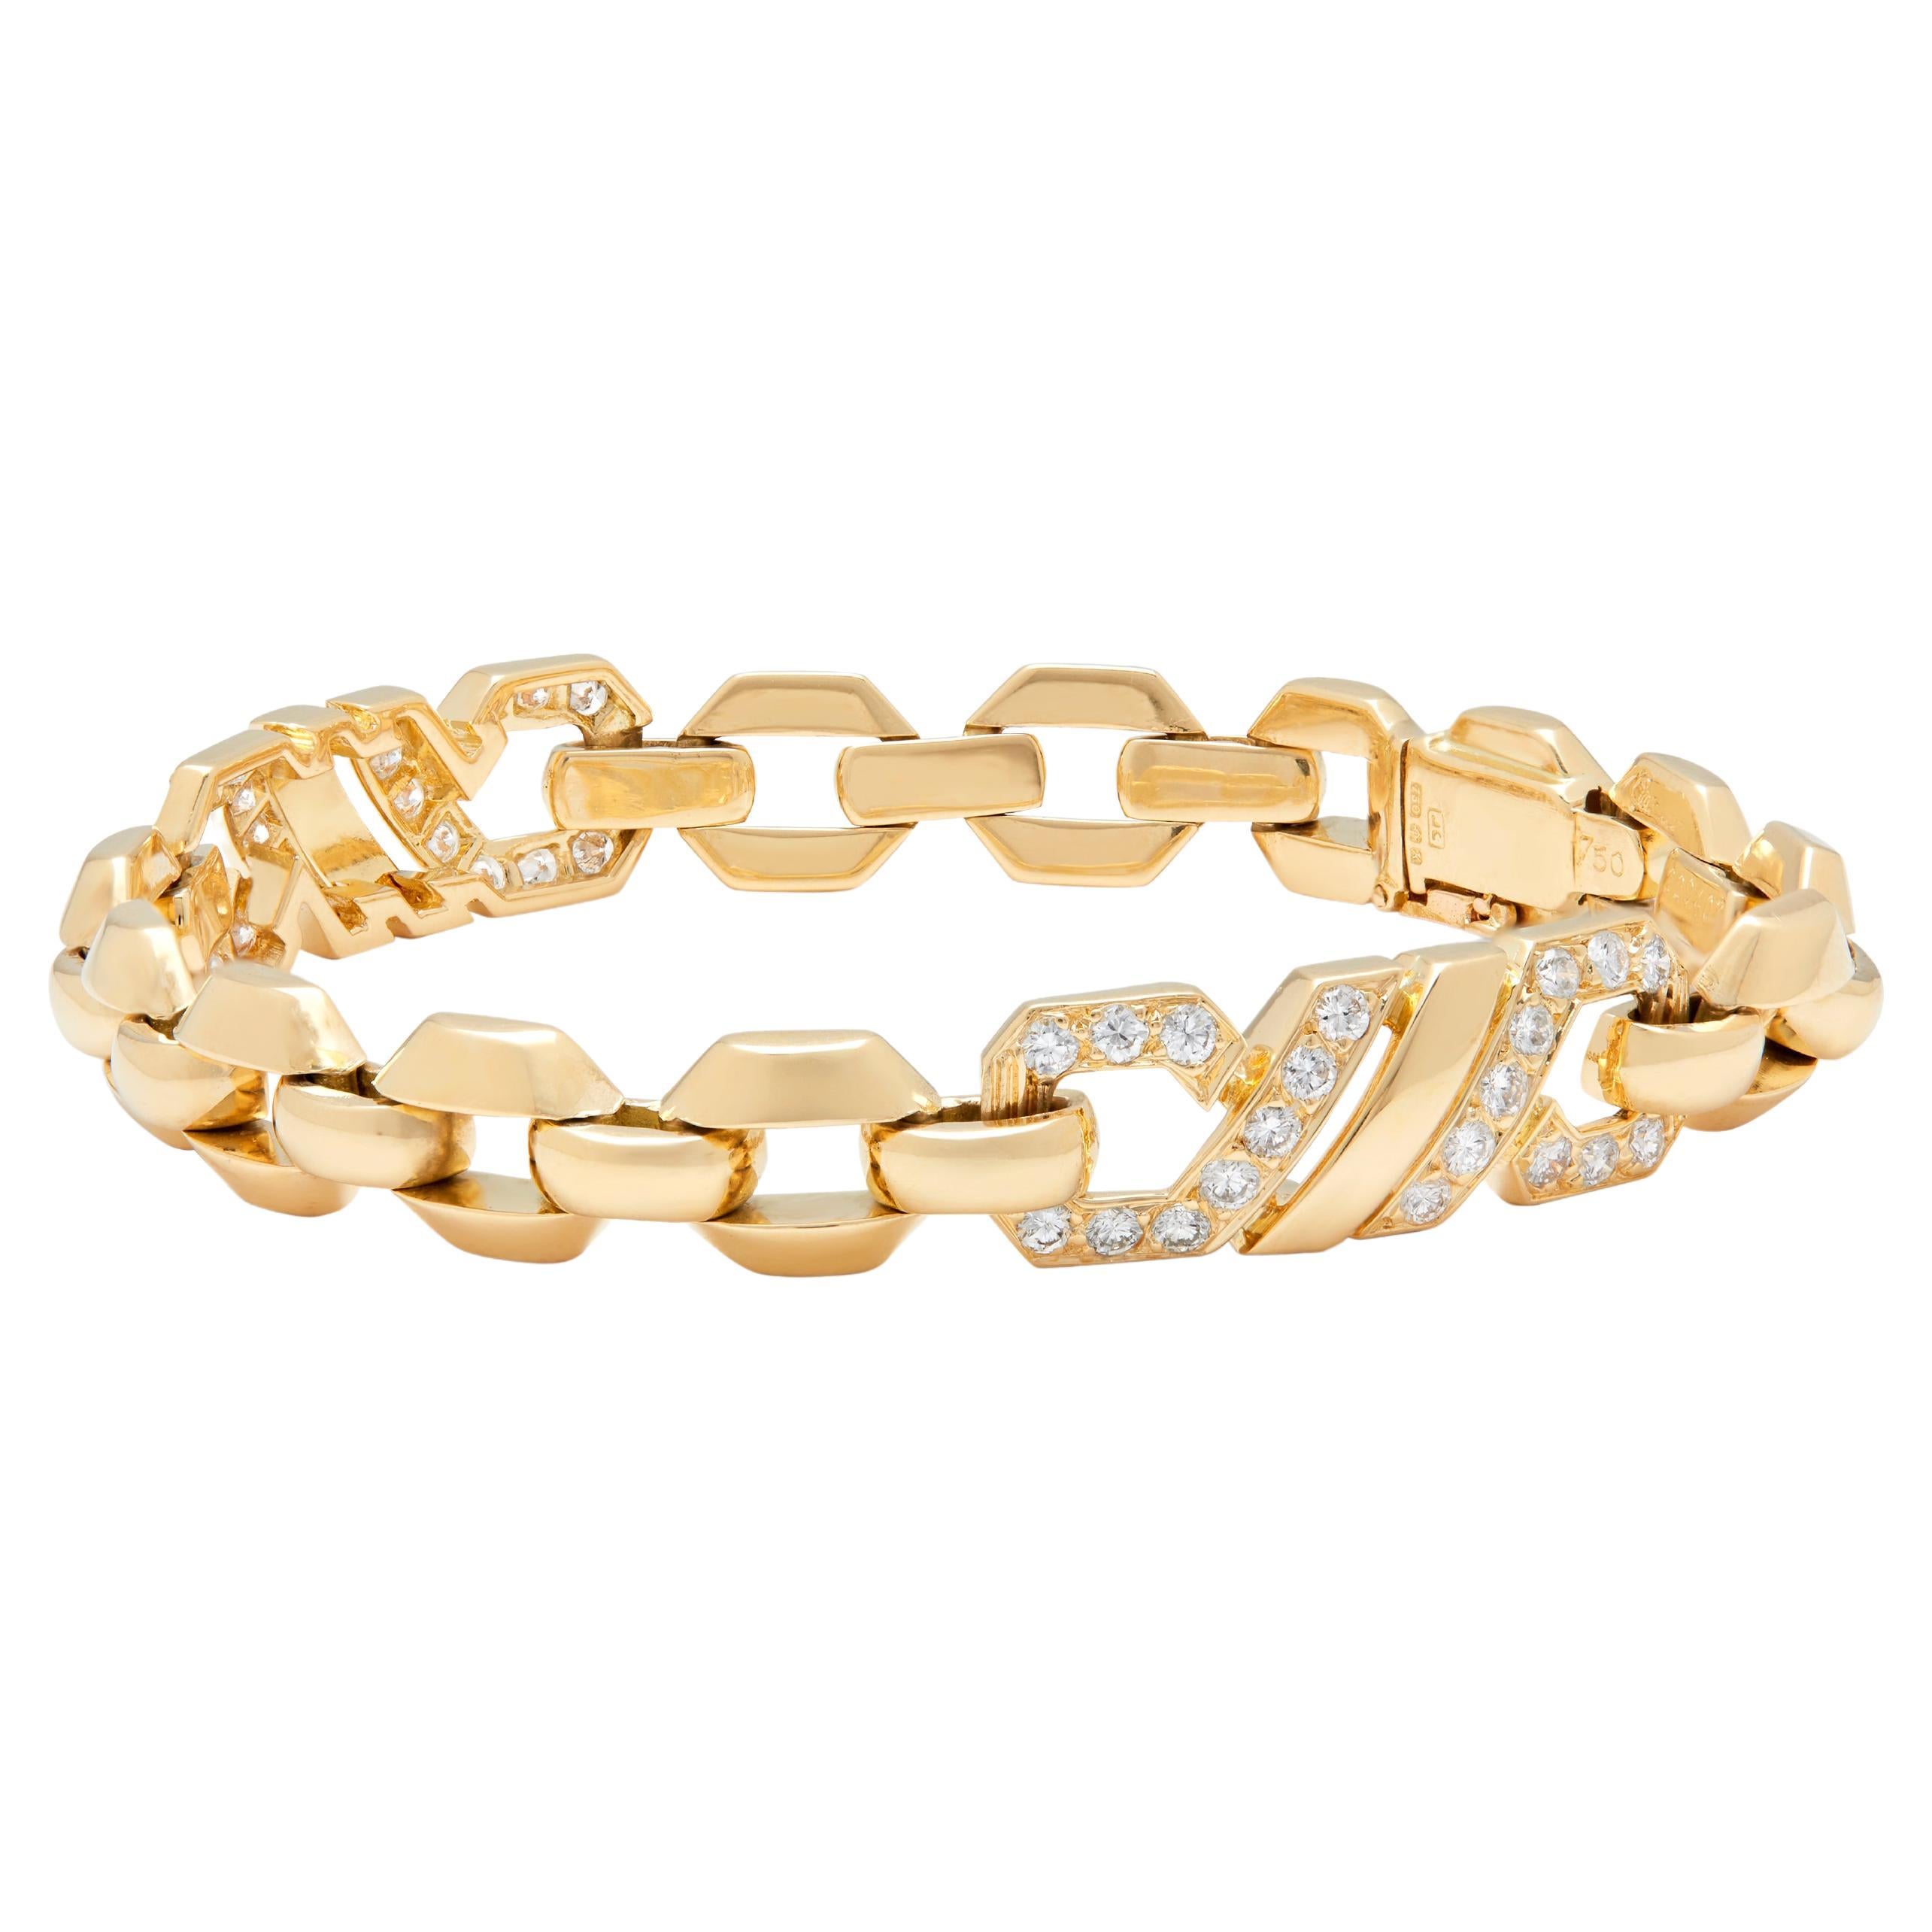 Cartier Paris Foxtrot 18ct yellow gold diamond bracelet 